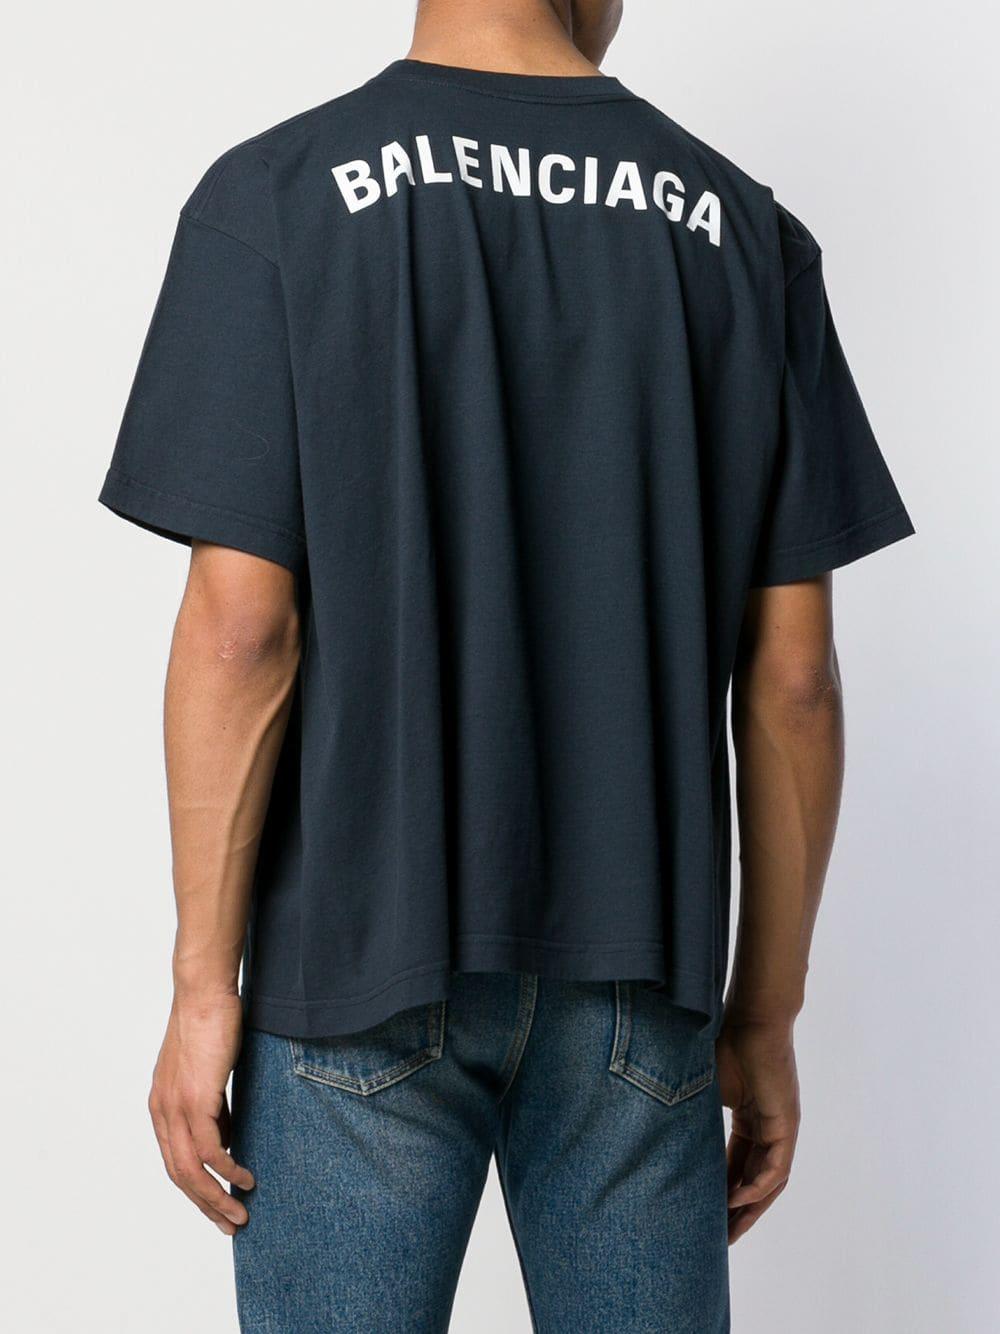 Balenciaga Rear Logo Print Oversize T-shirt in Blue for Men - Lyst